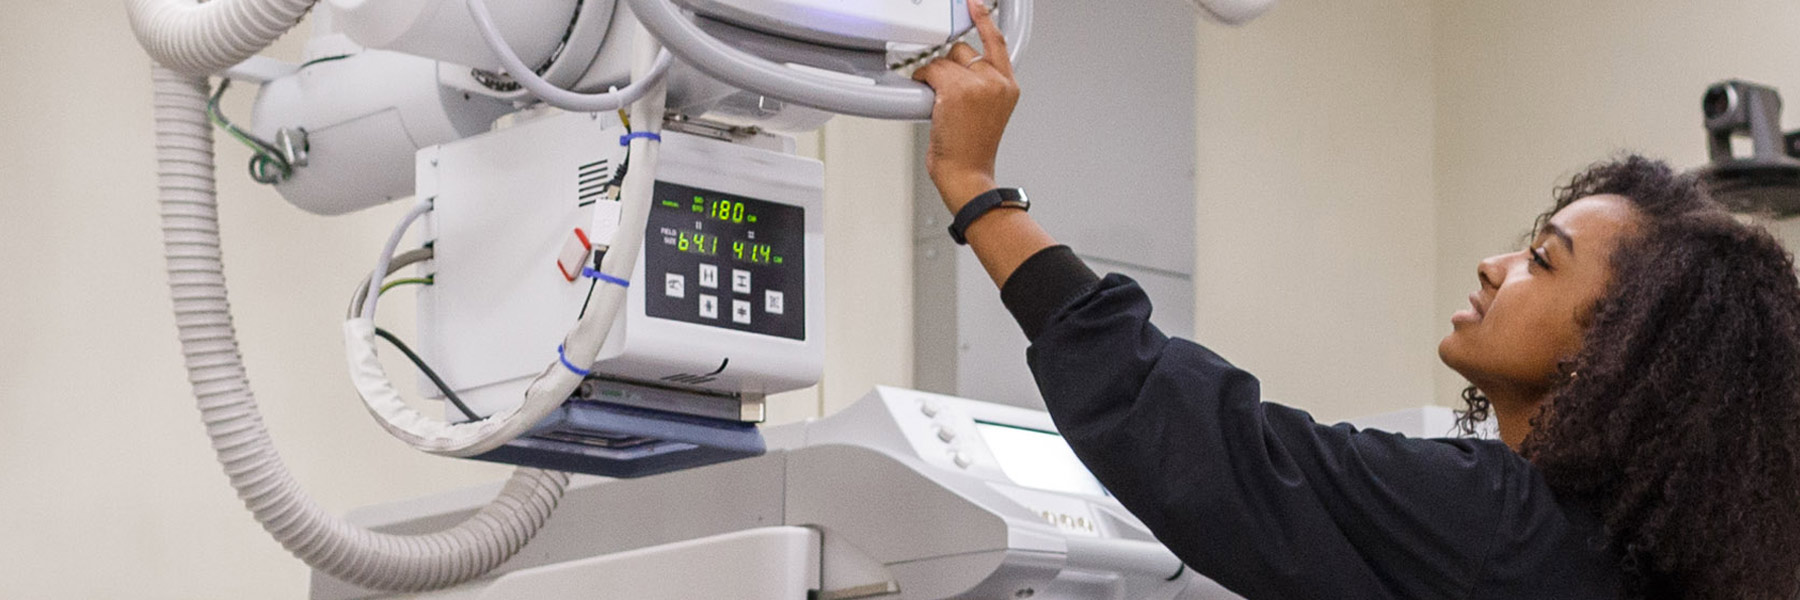 An IU nursing student in scrubs prepares an X-ray machine for a fluoroscopy scan.